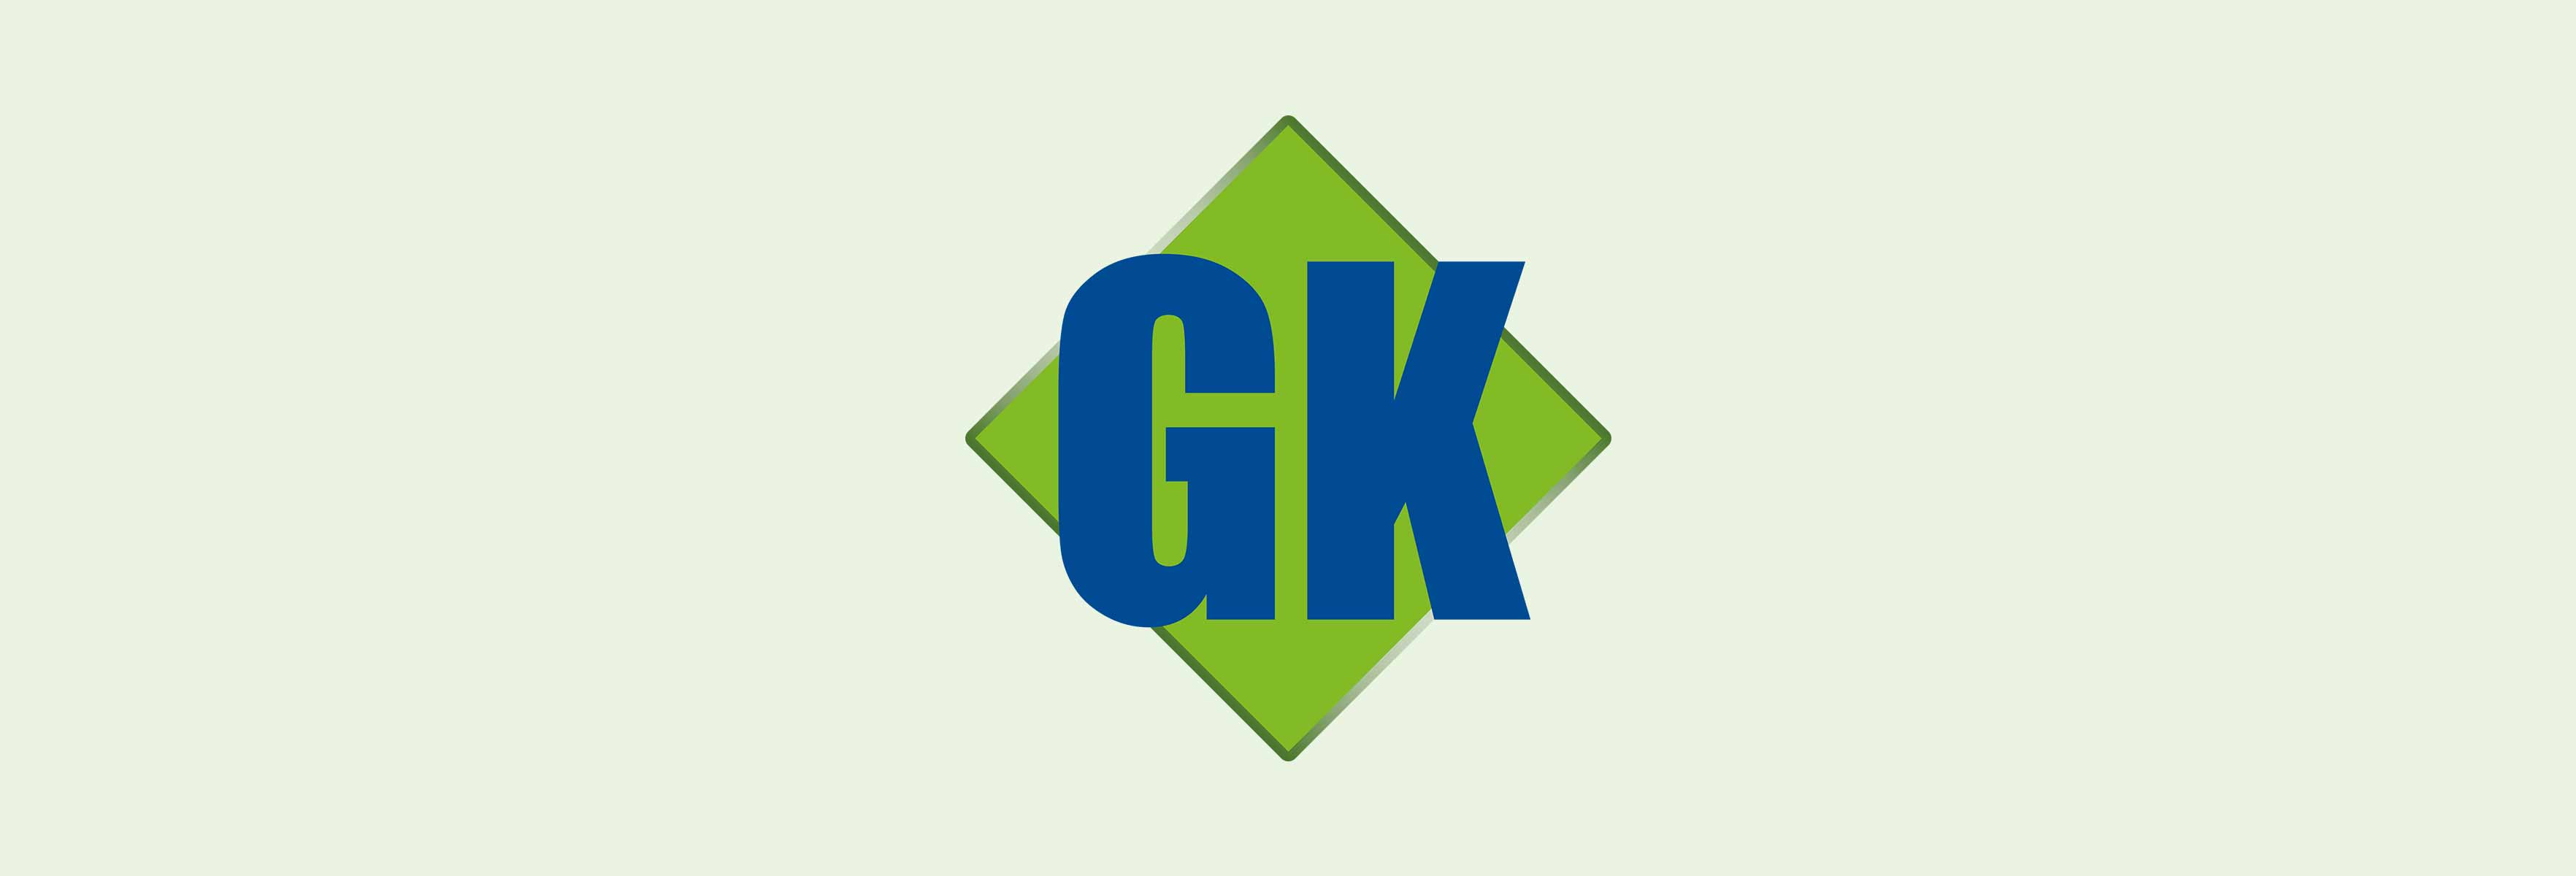 GK logo for news page header